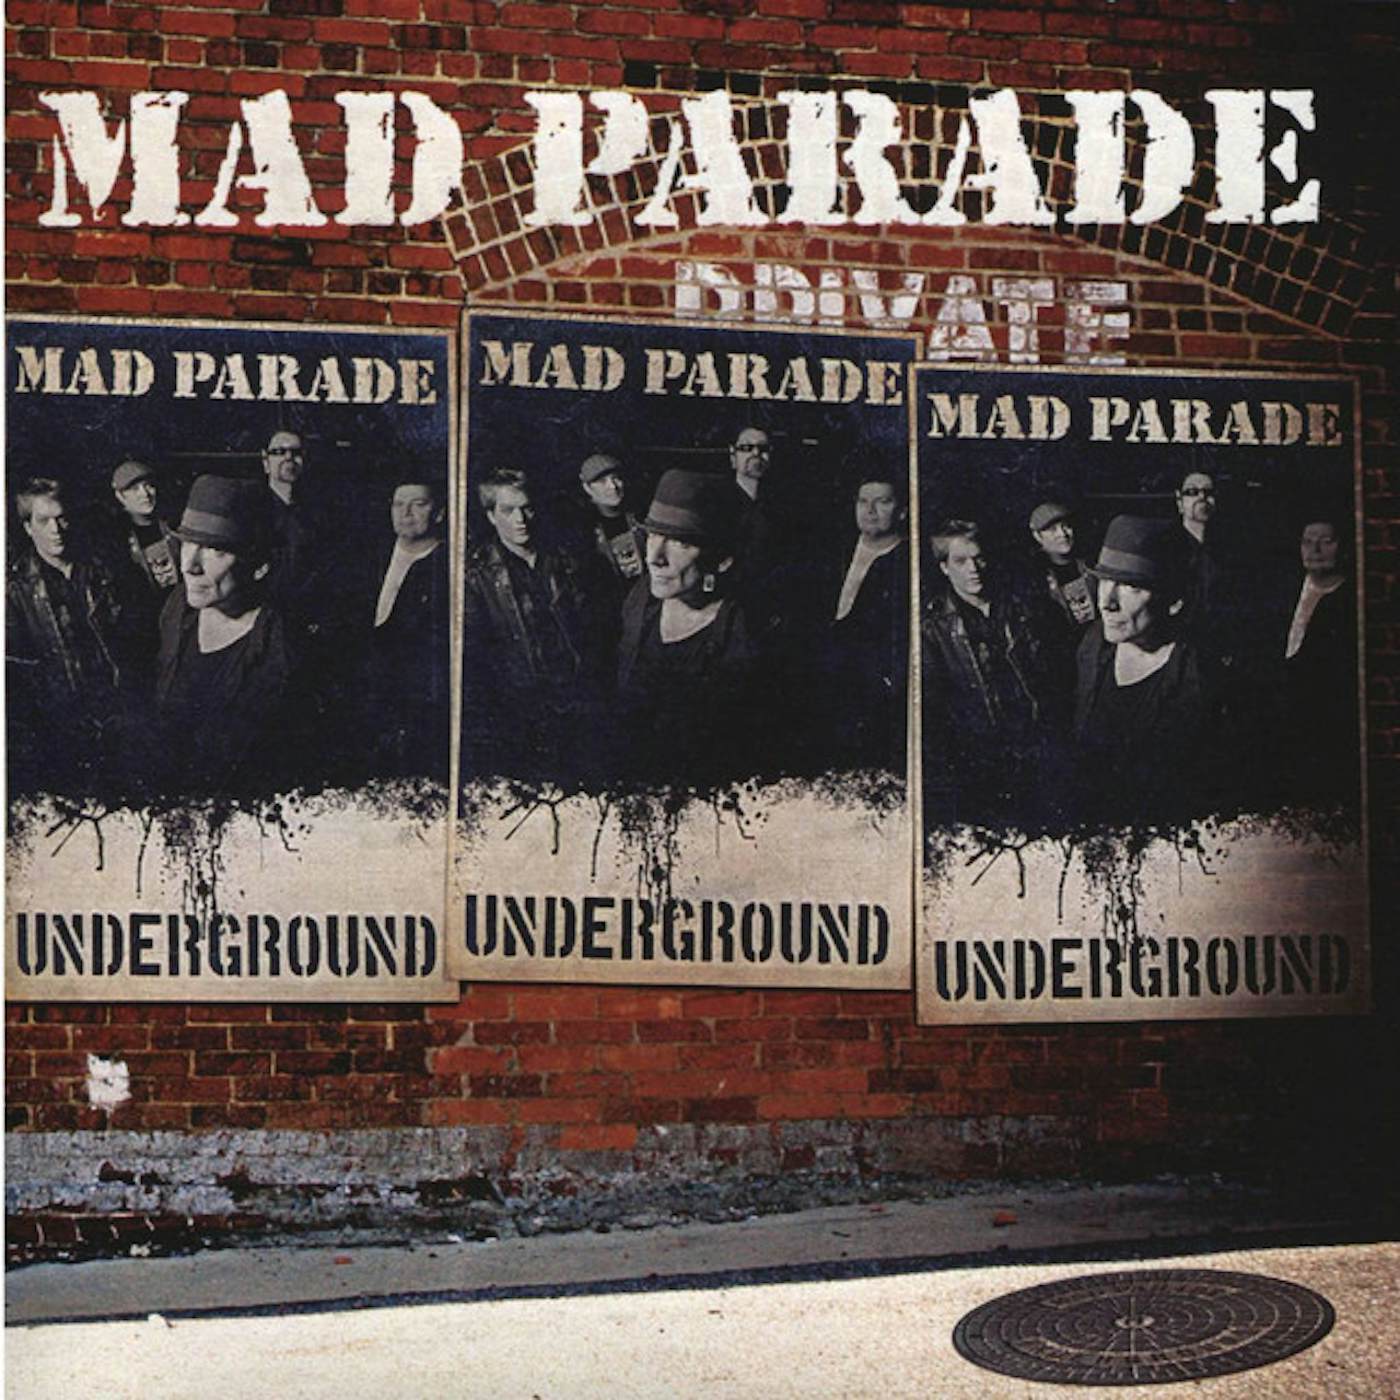 Mad Parade Underground Vinyl Record